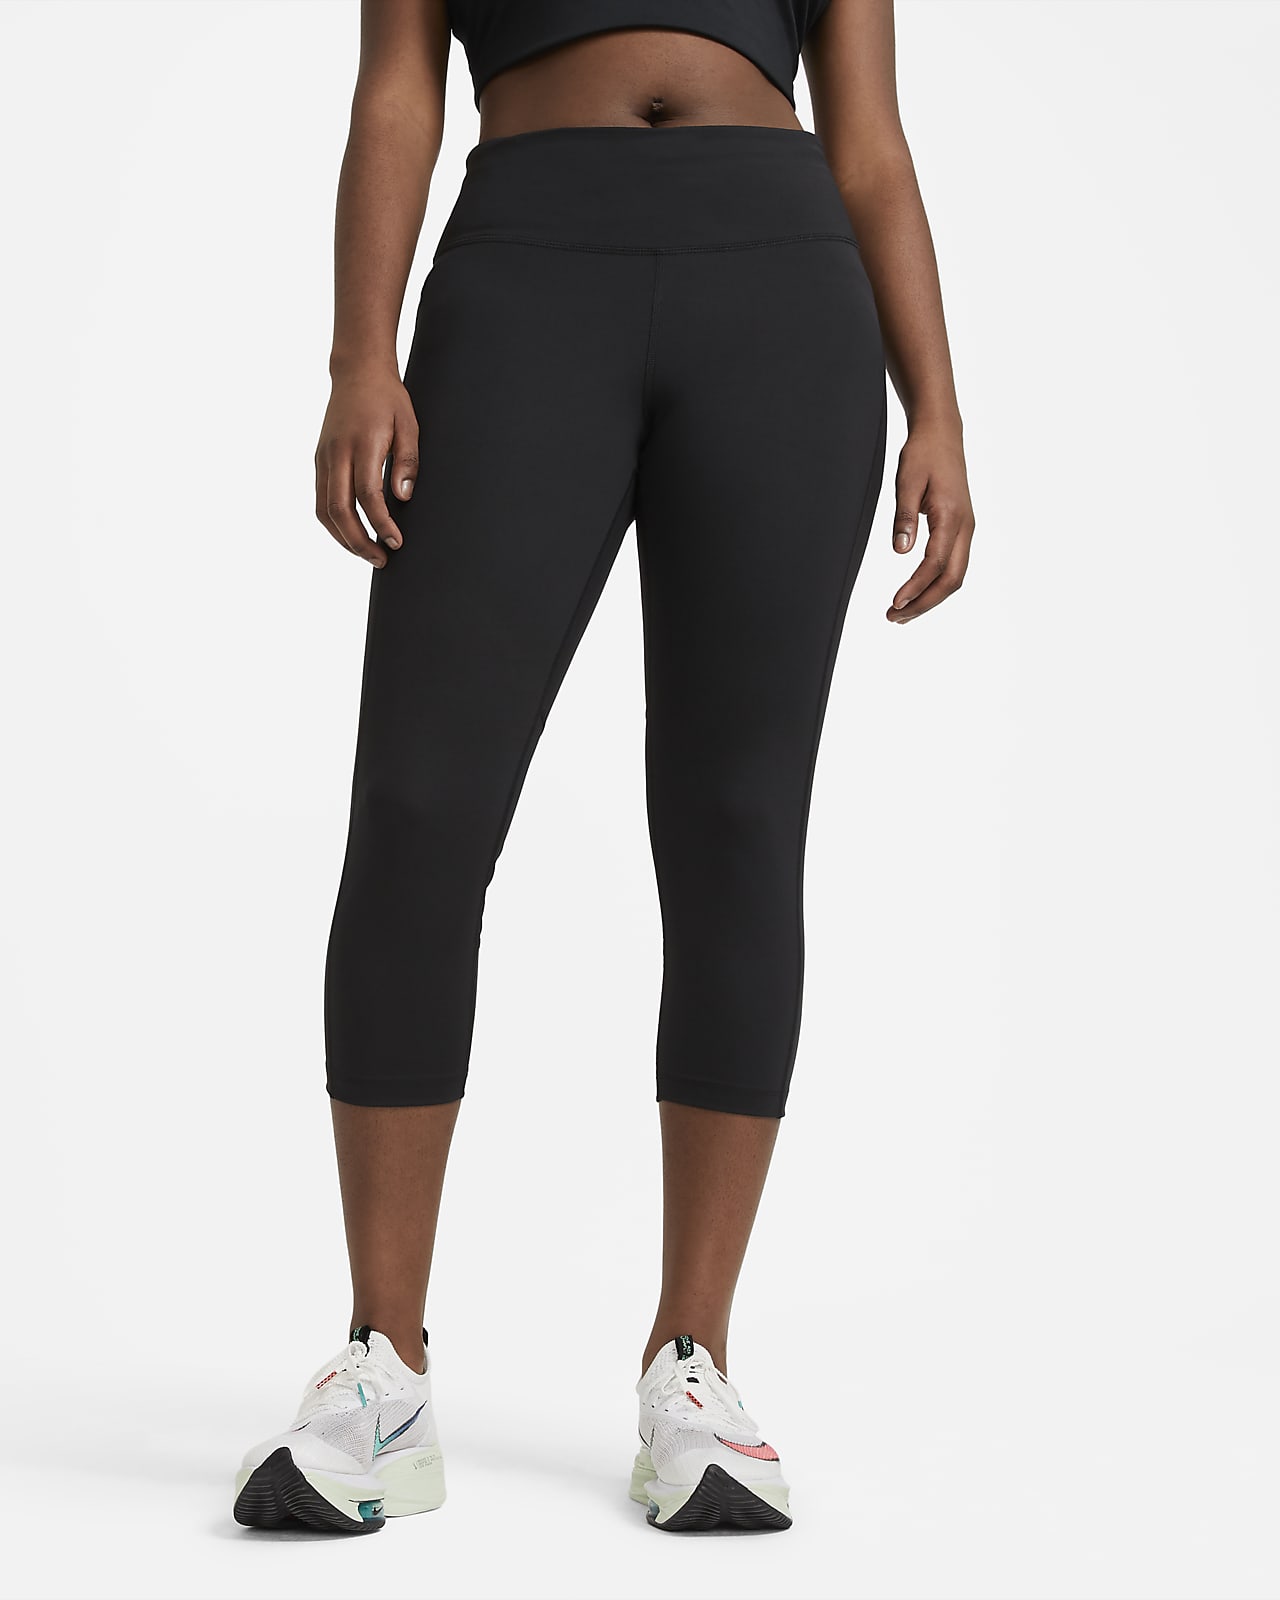 Leggings de running recortadas de cintura normal Nike Fast para mulher (tamanhos grandes)